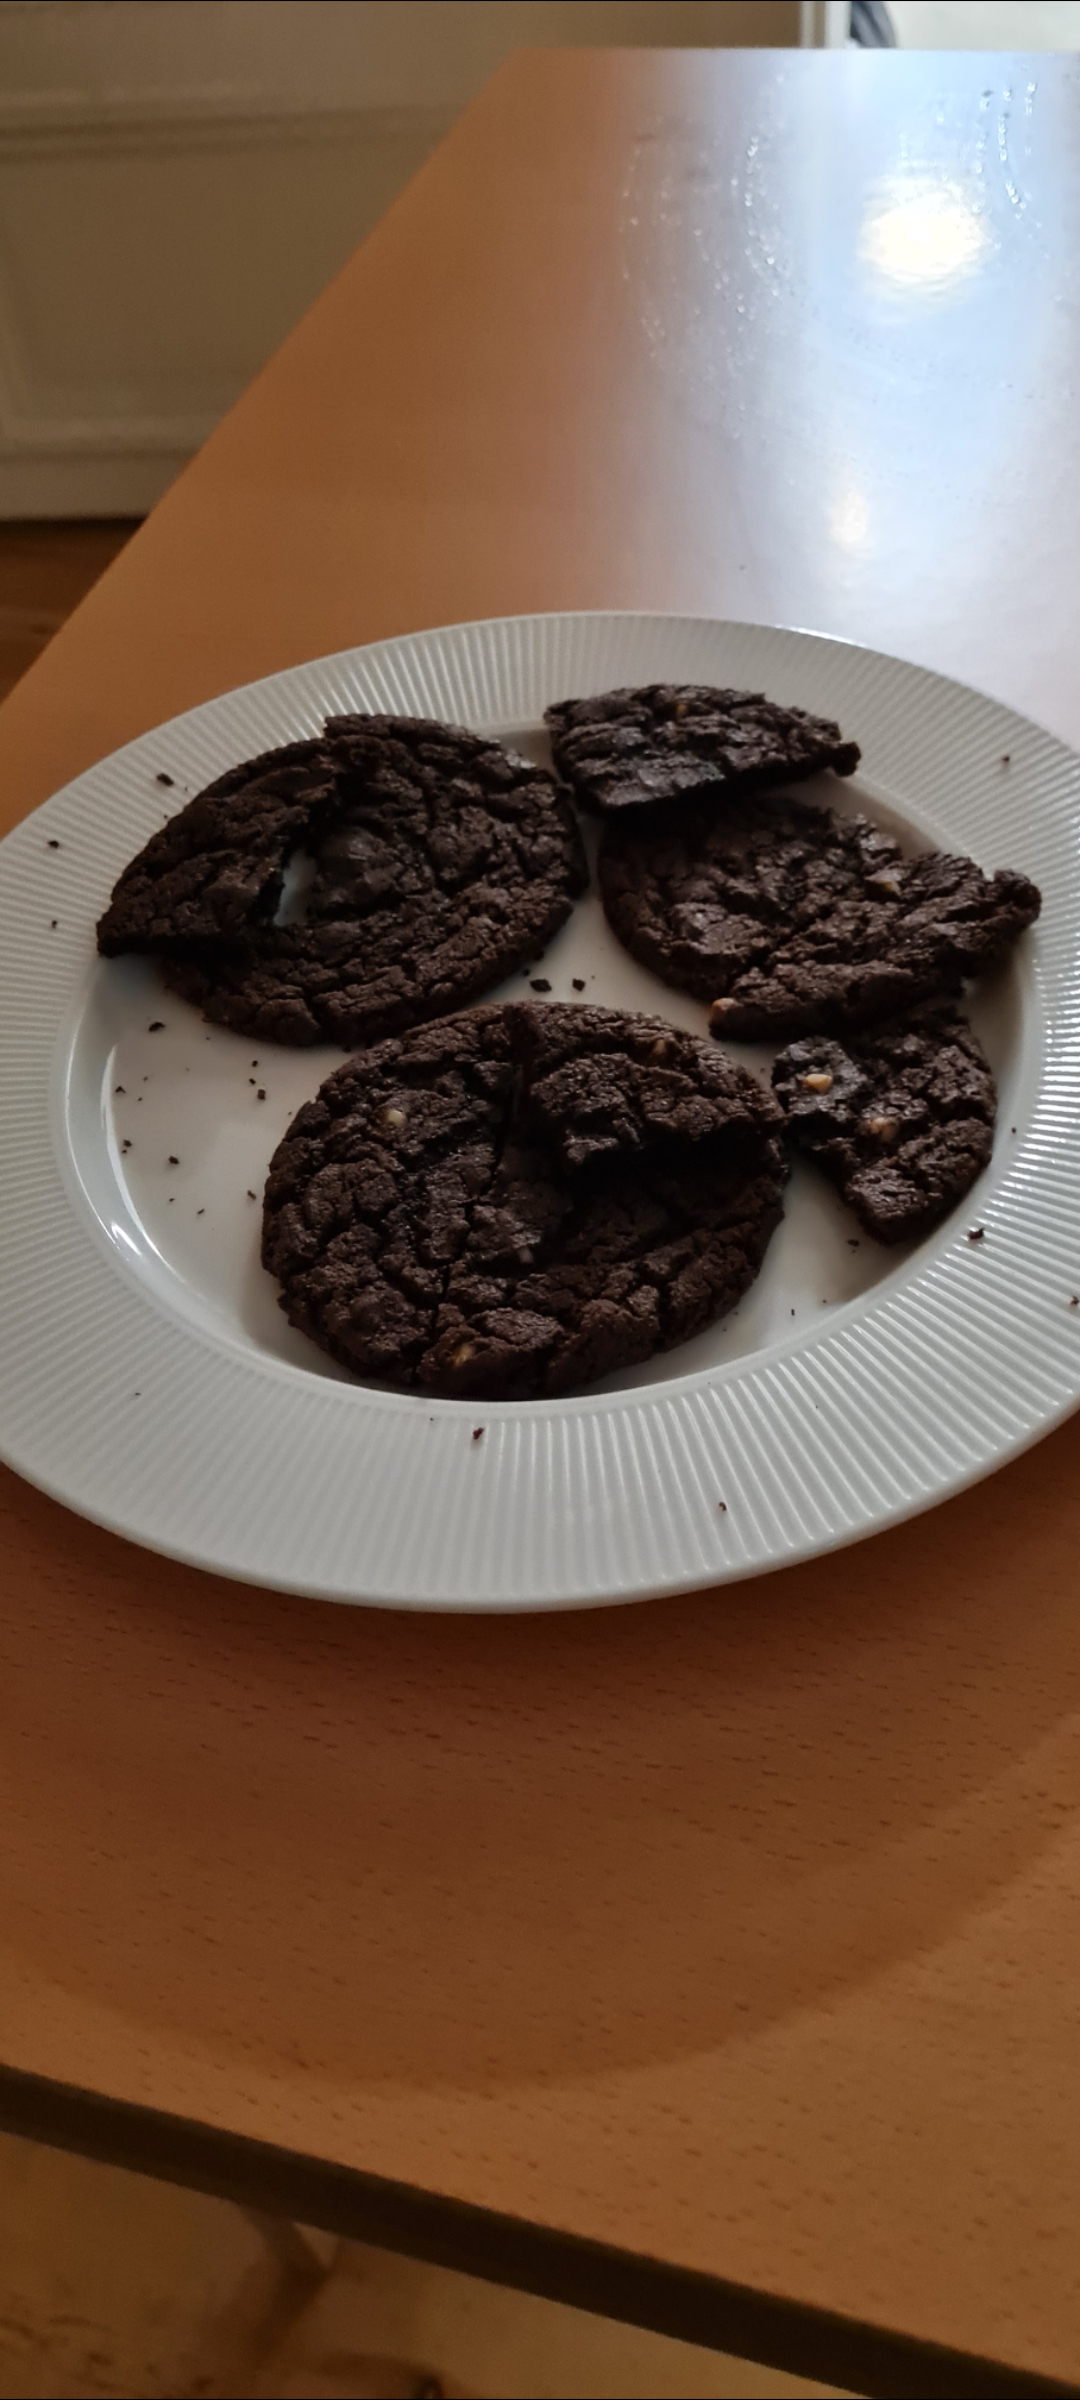 Hur bakar man chokladcookies?